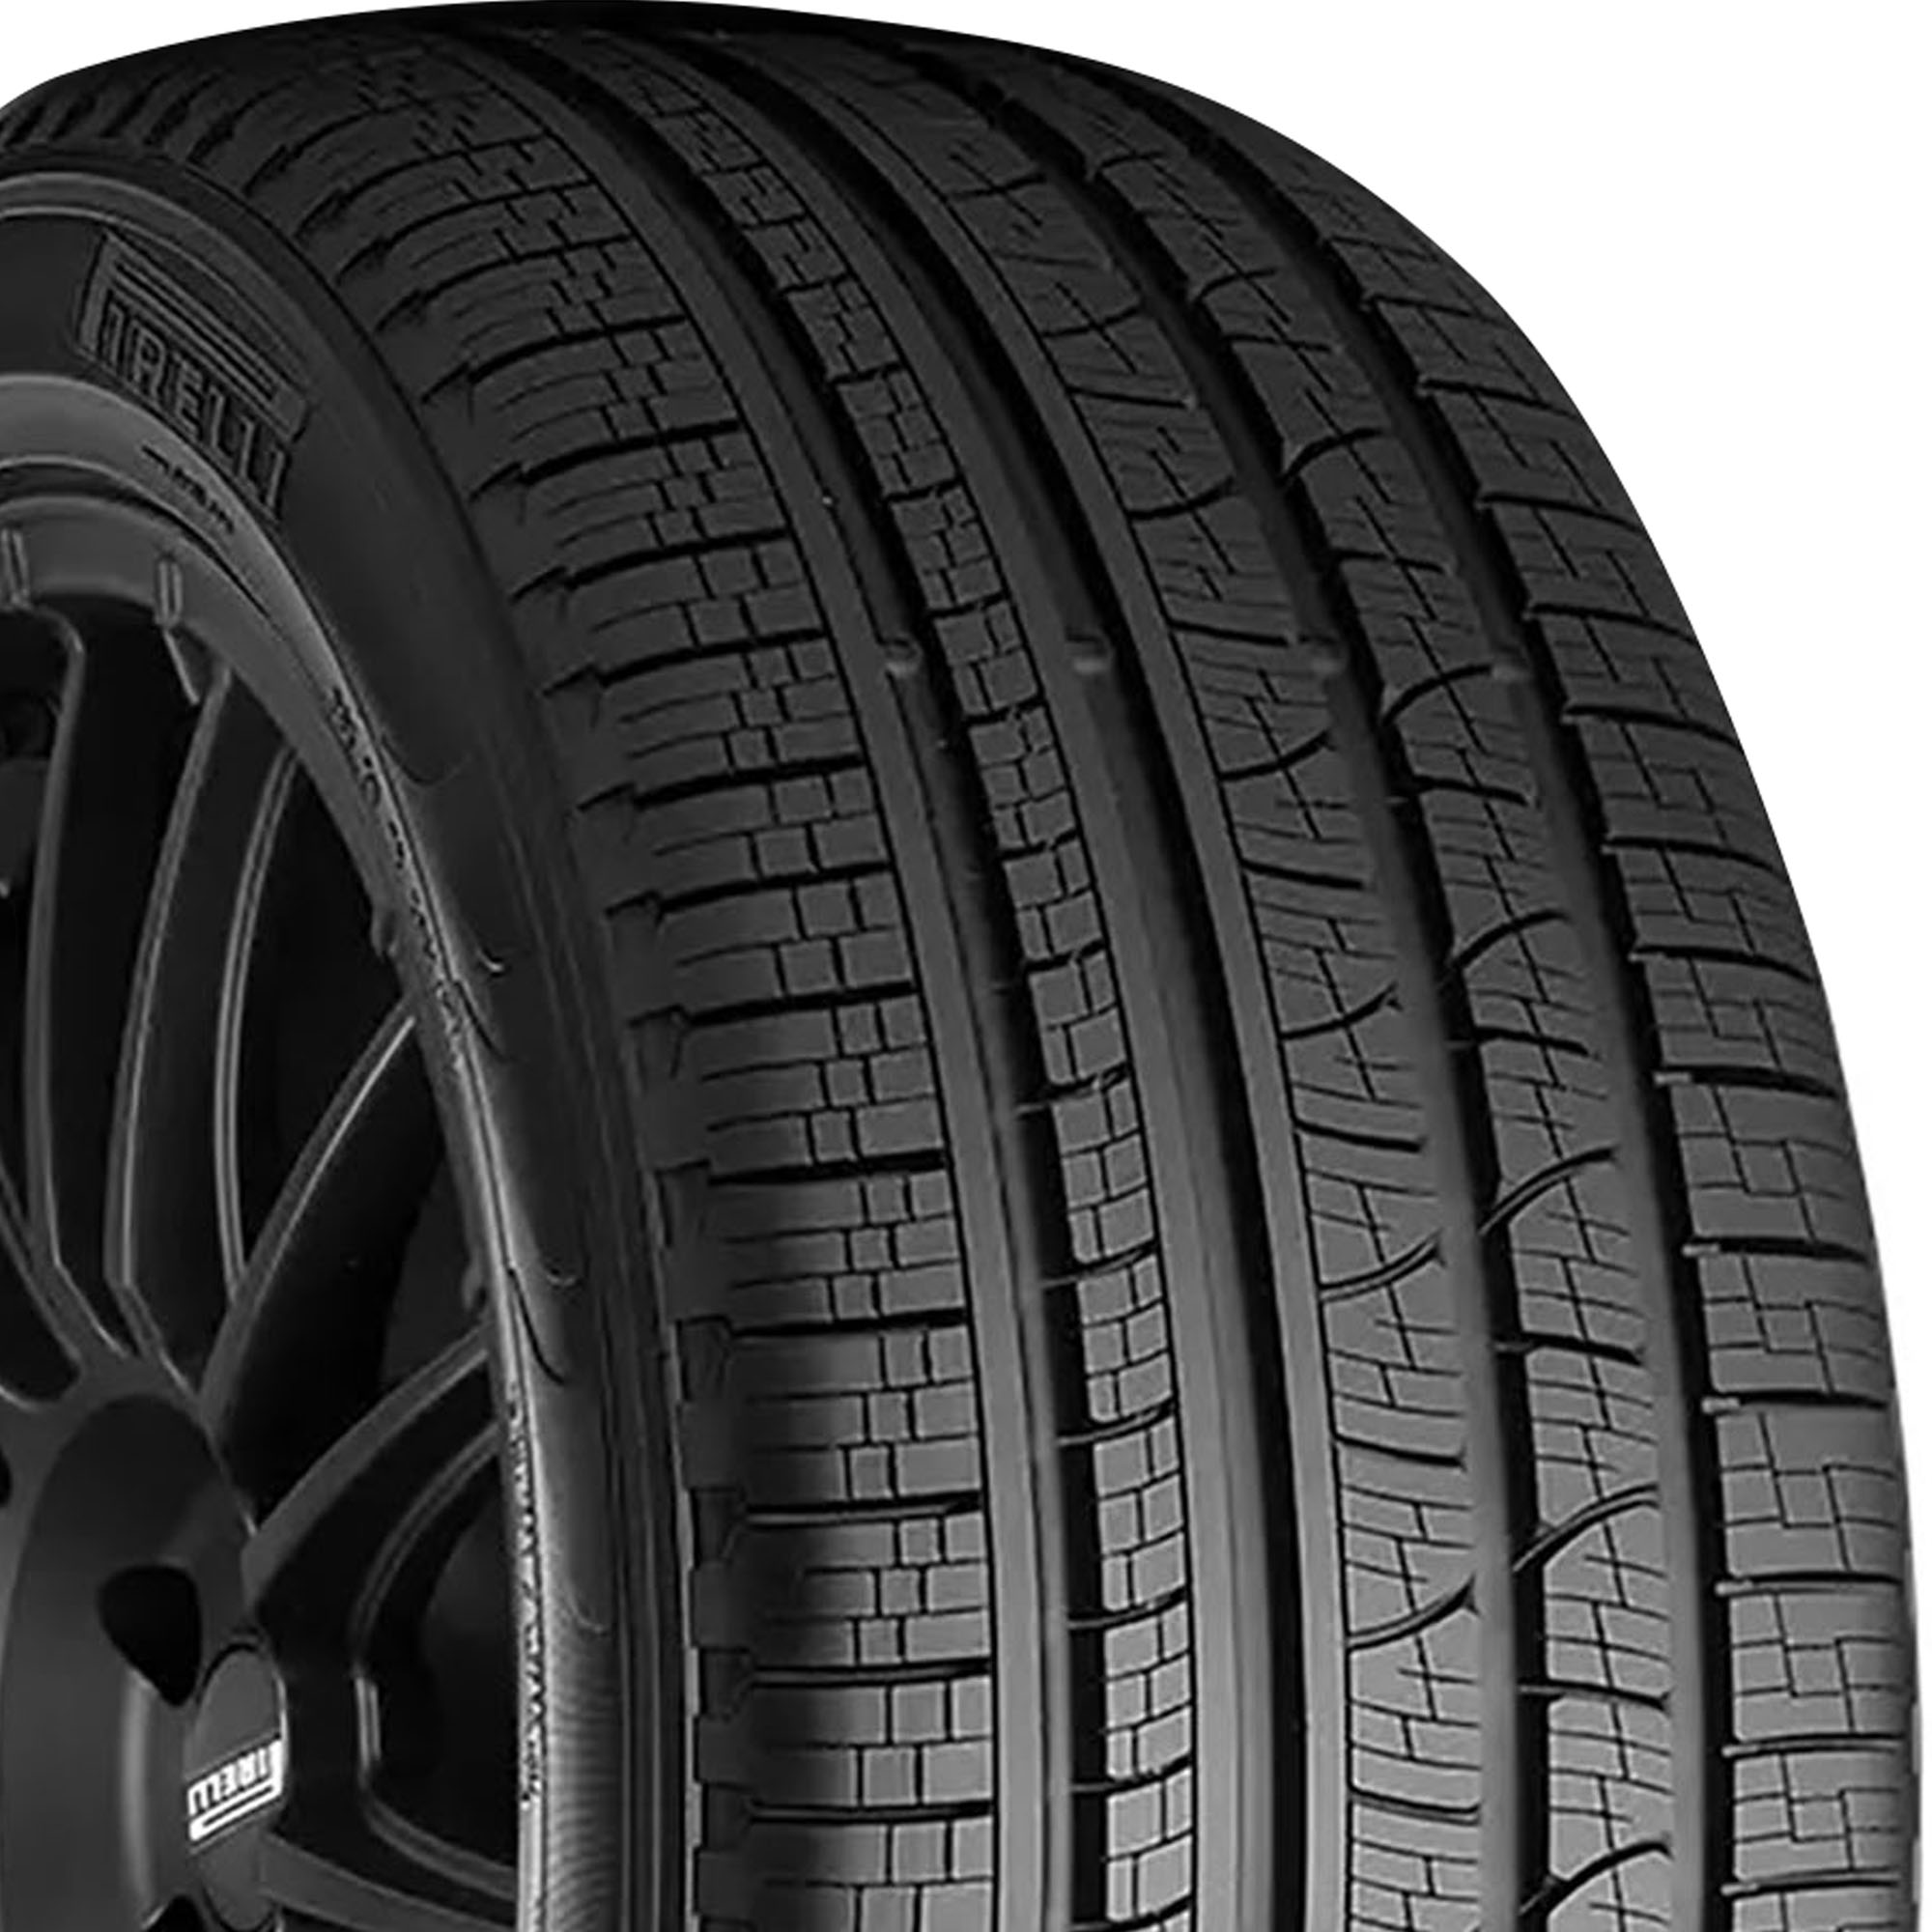 - 16 215/65r16 2 New 65 Scorpion Verde All 215 2156516 eBay Pirelli Tires Season |